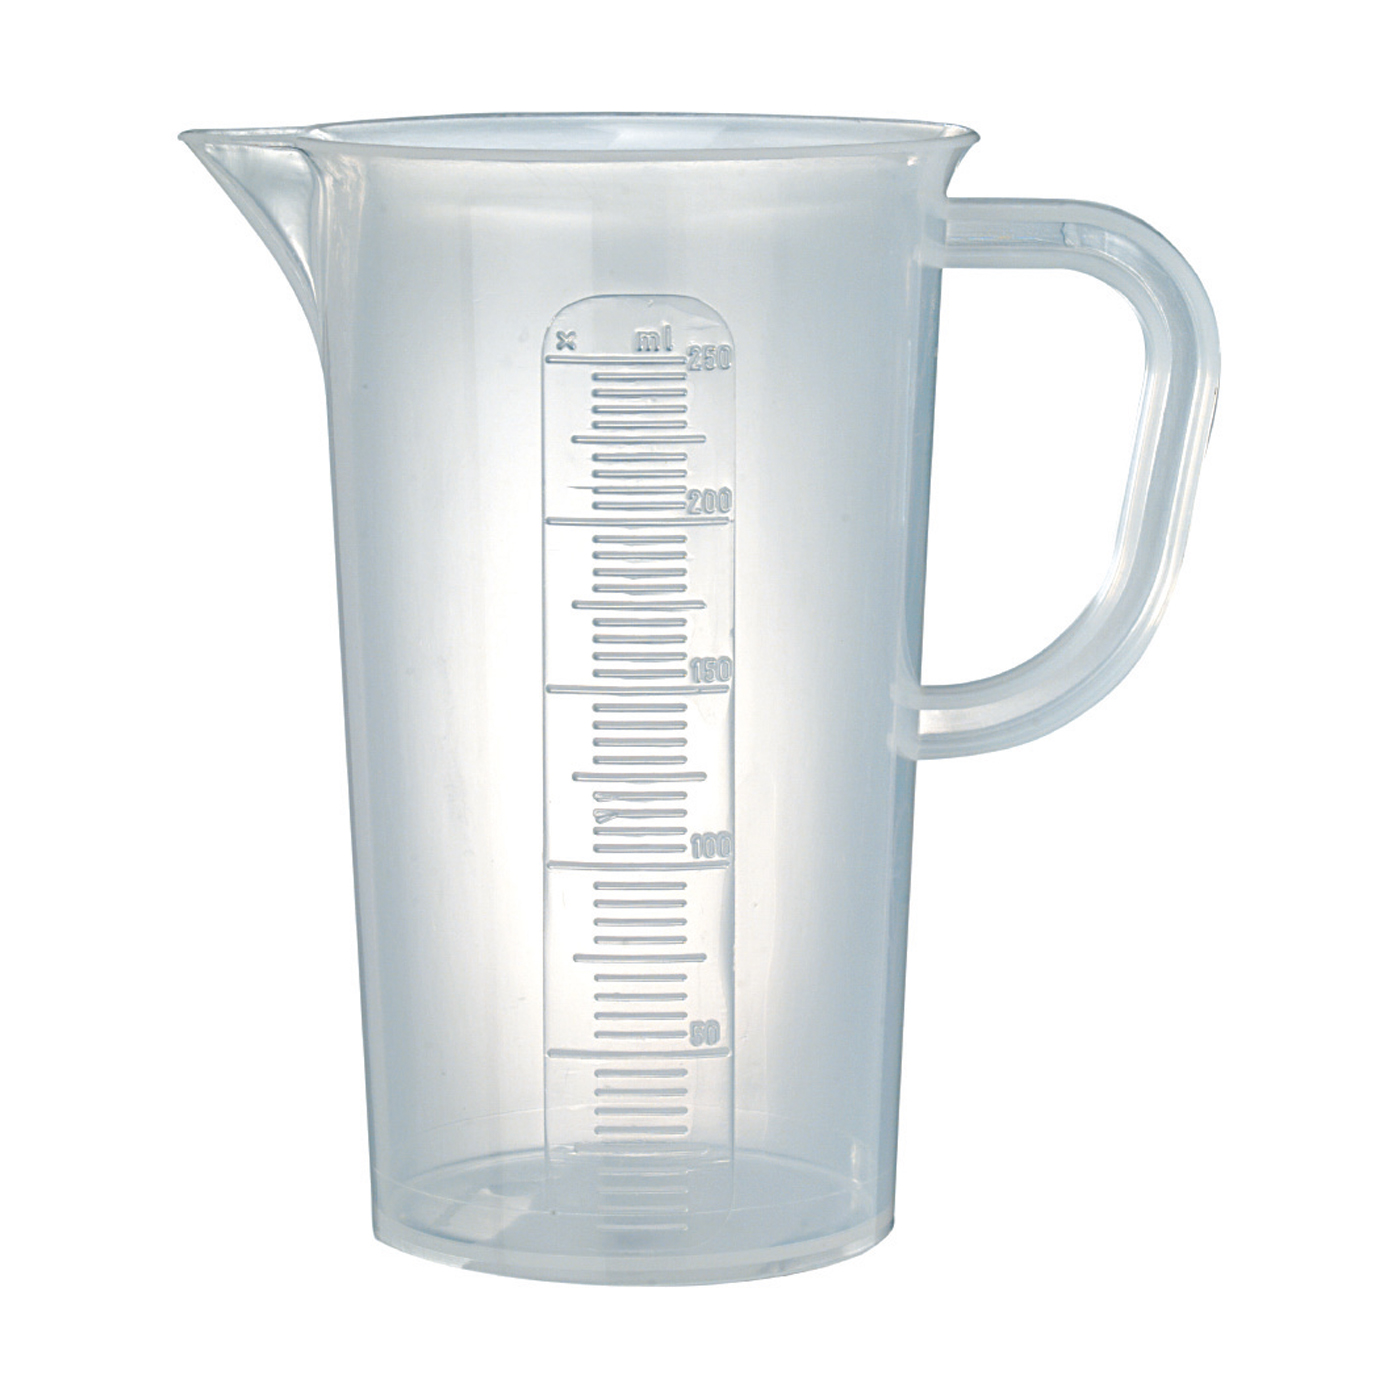 FINO Measuring Beaker, 250 ml - 1 piece